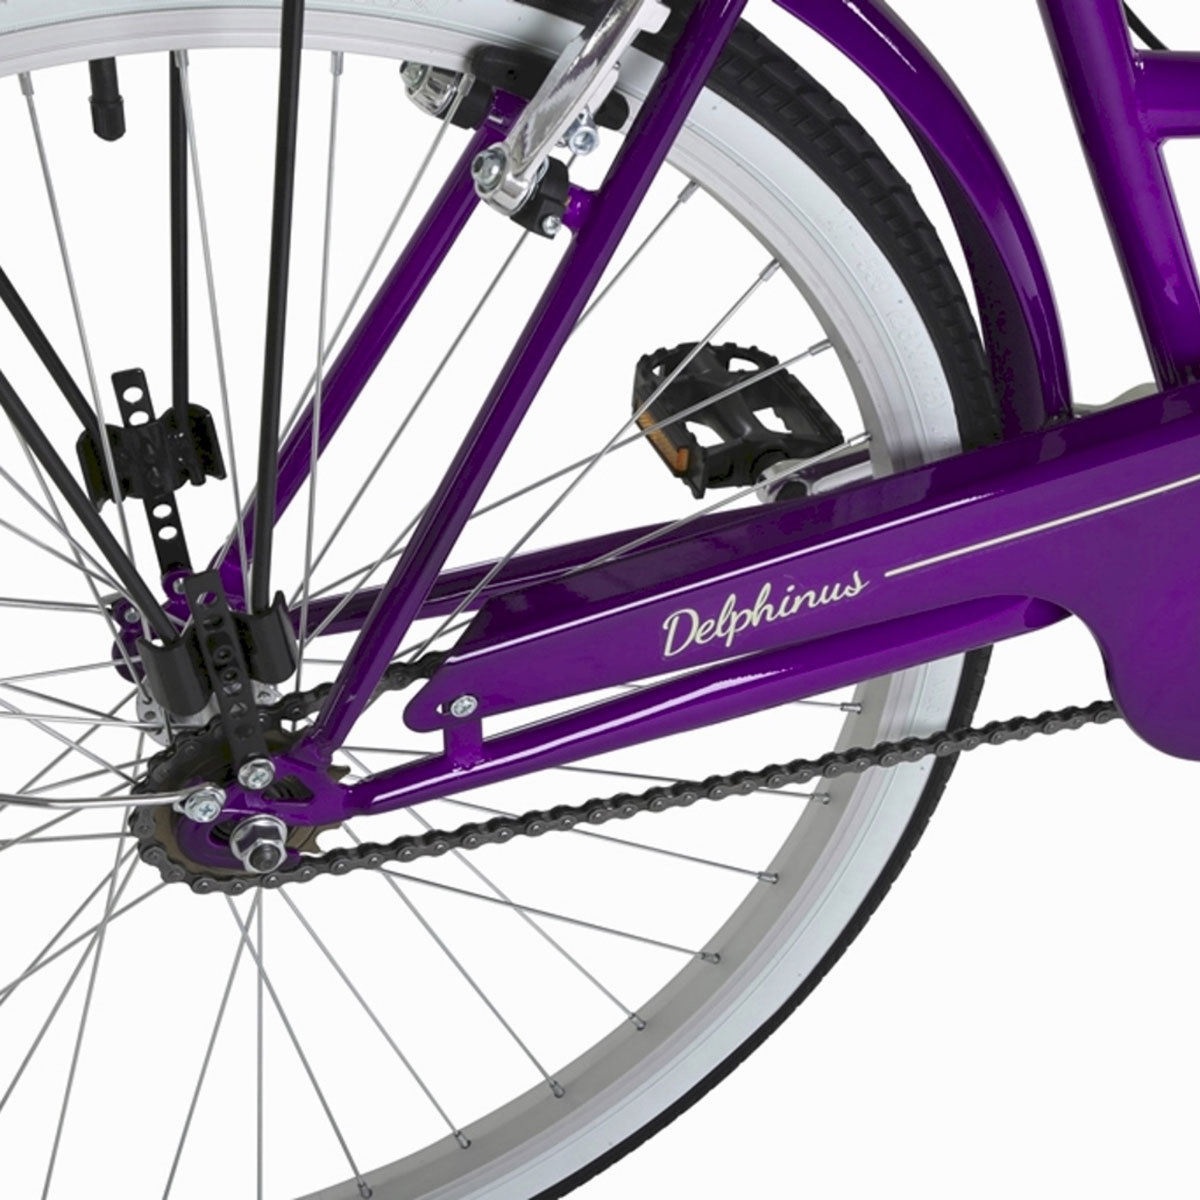 Barracuda 26" (66cm) Delphinus Heritage Single Speed Bike in Purple